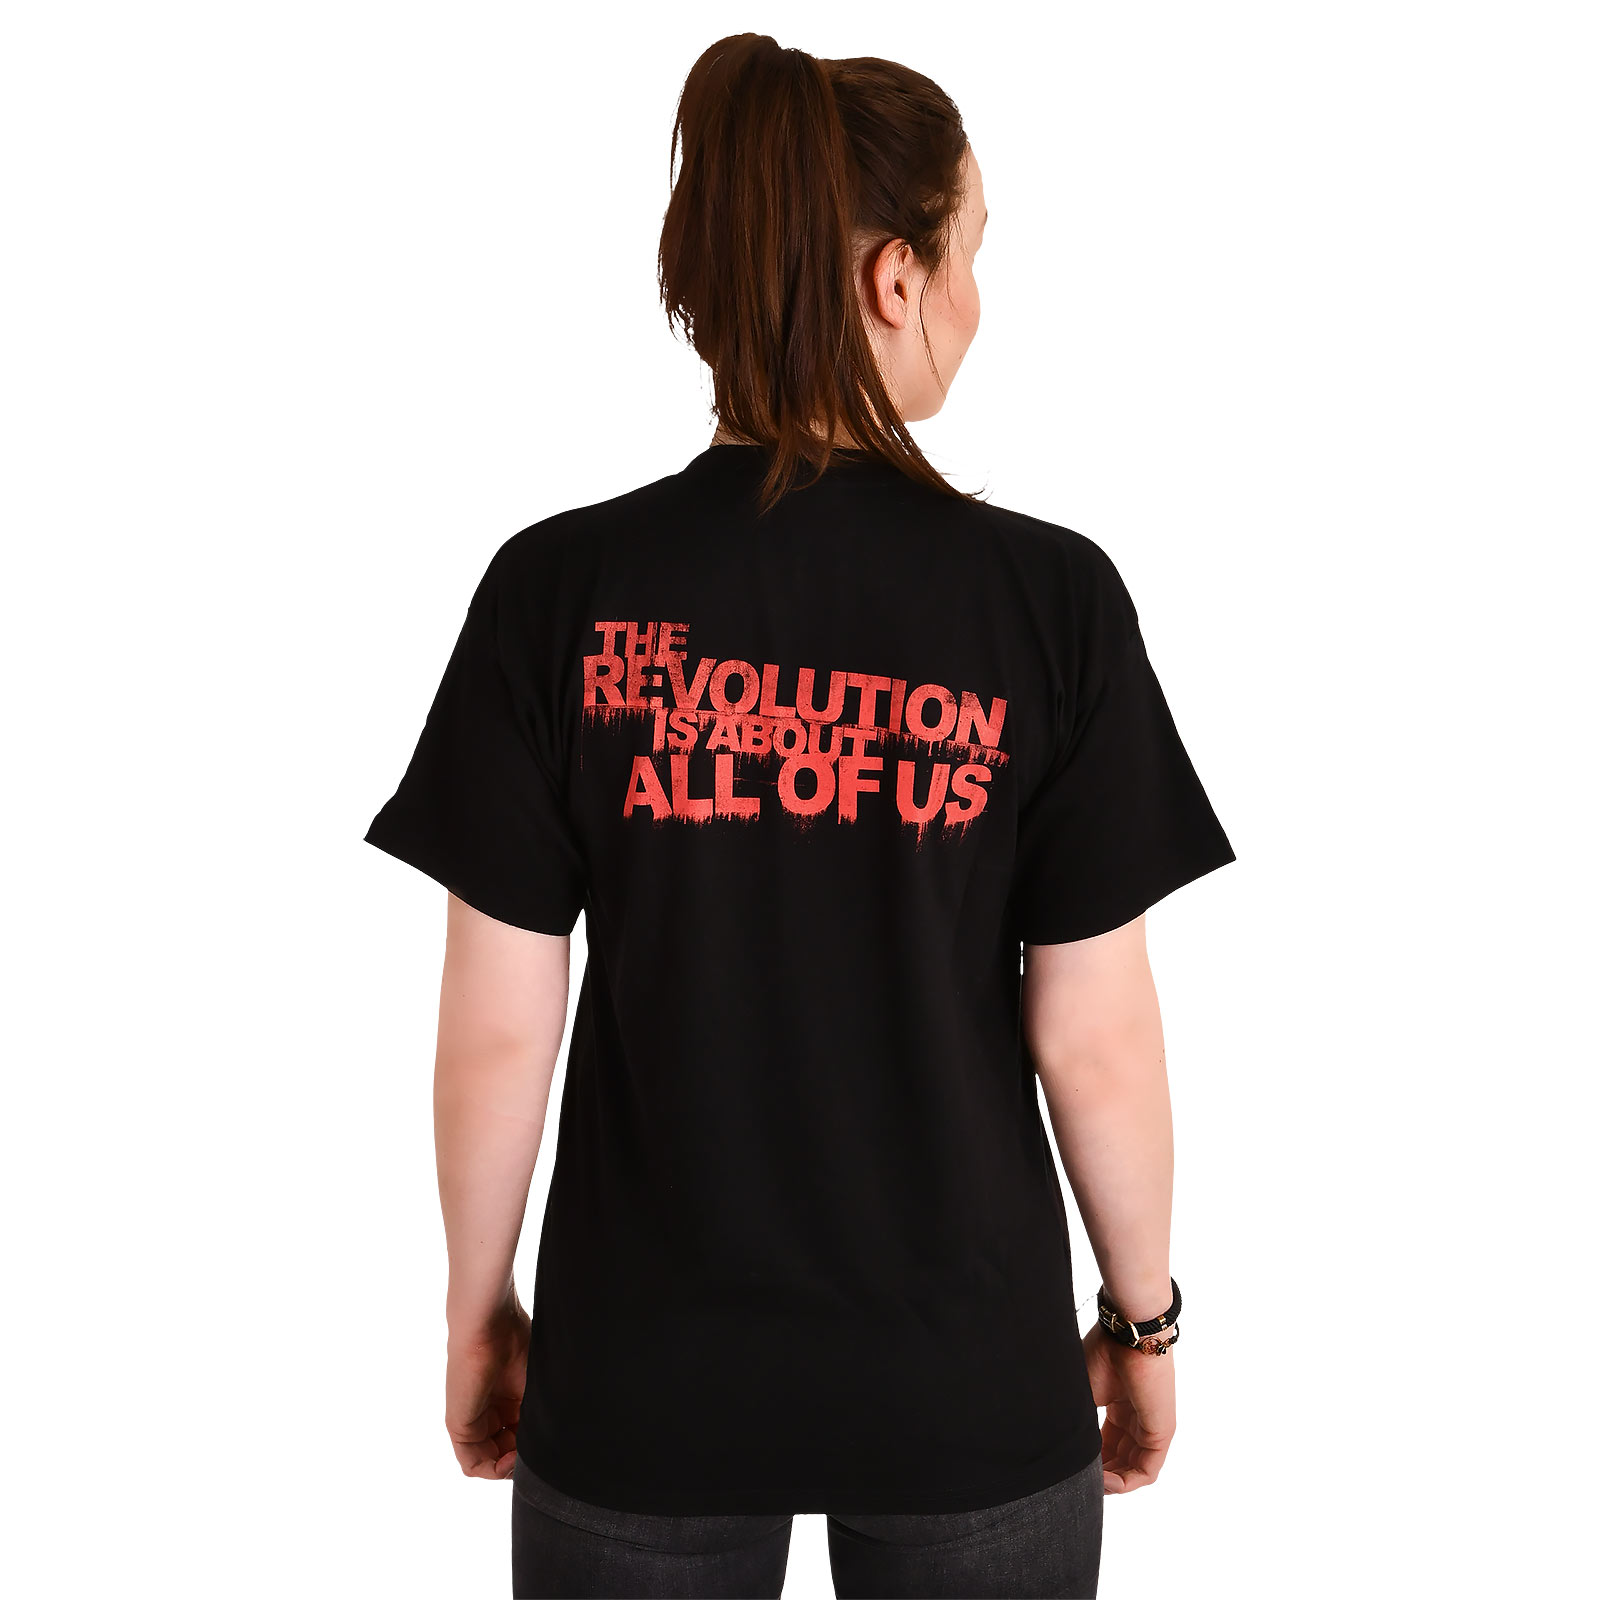 Hunger Games - Mockingjay Symbol T-Shirt Black